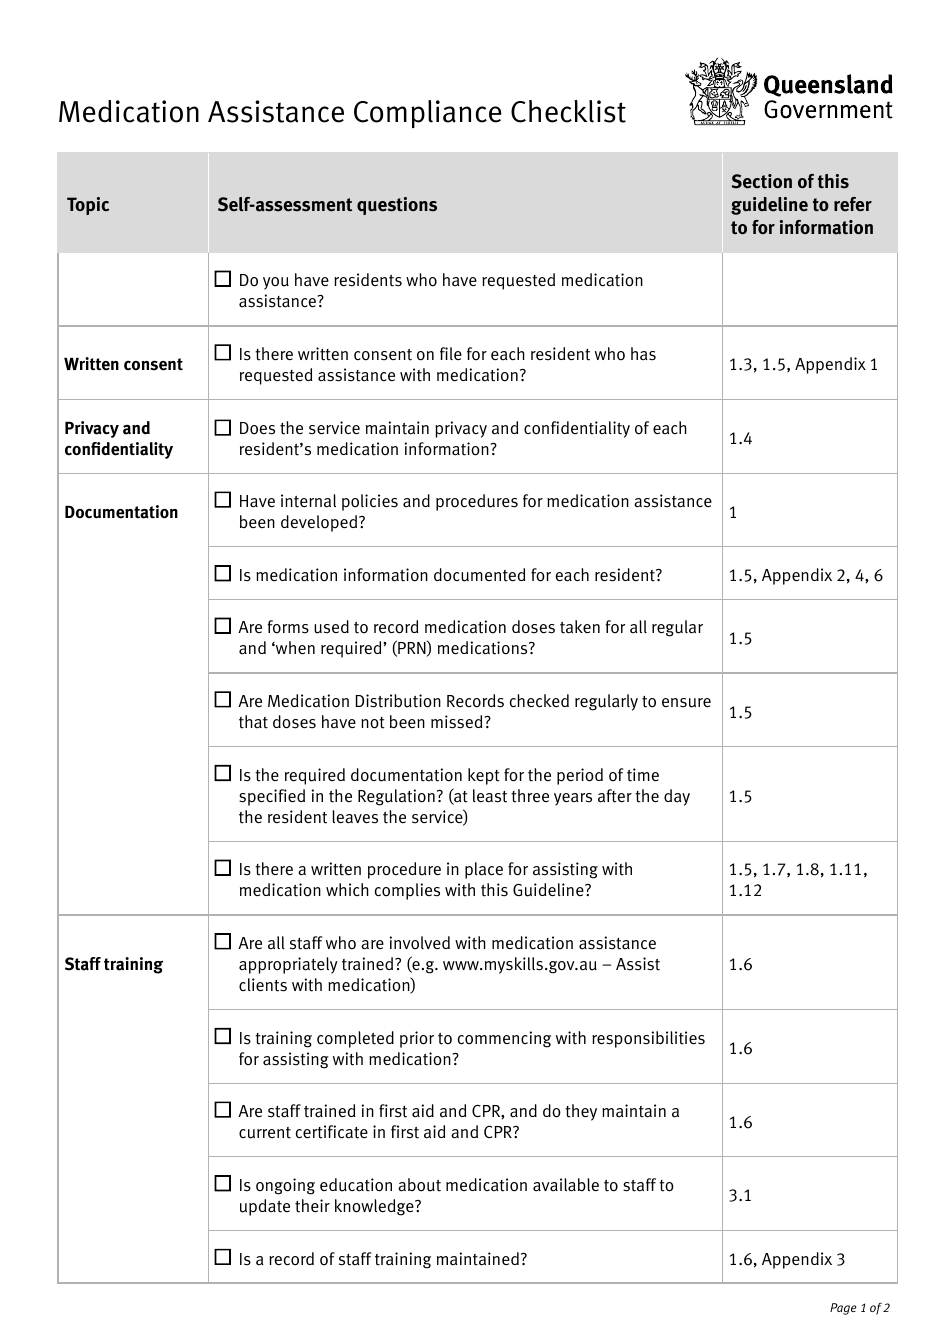 Medication Assistance Compliance Checklist - Queensland, Australia, Page 1